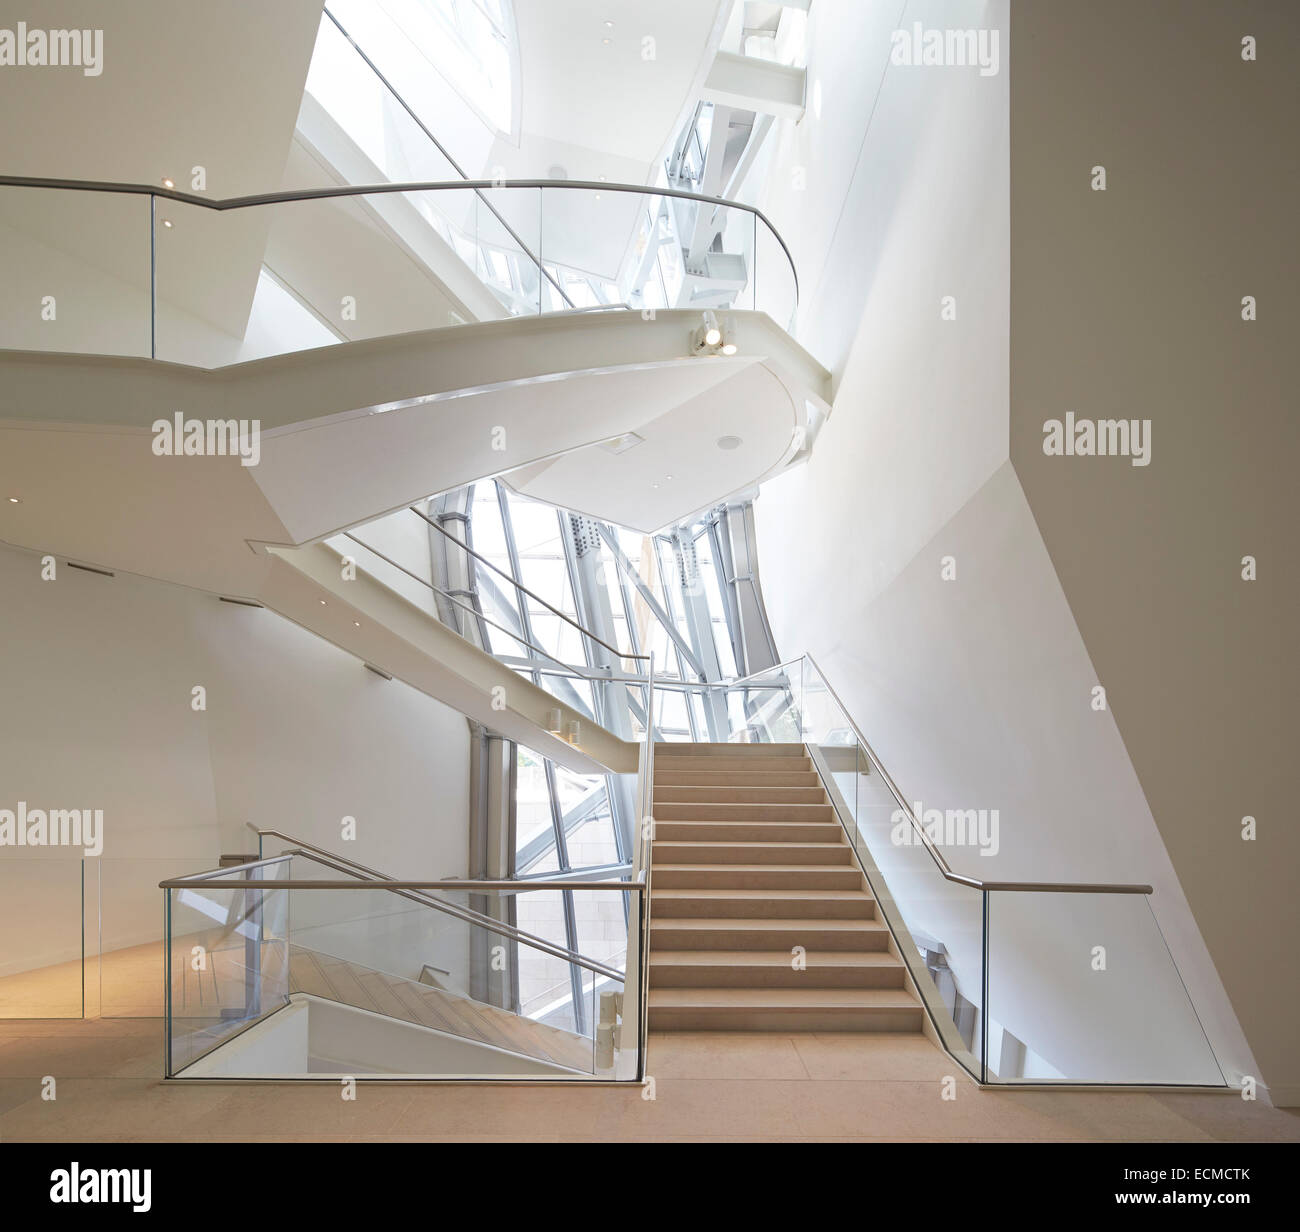 Fondation Louis Vuitton, Paris, France. Architect: Gehry Partners LLP, 2014. Interior stairways. Stock Photo